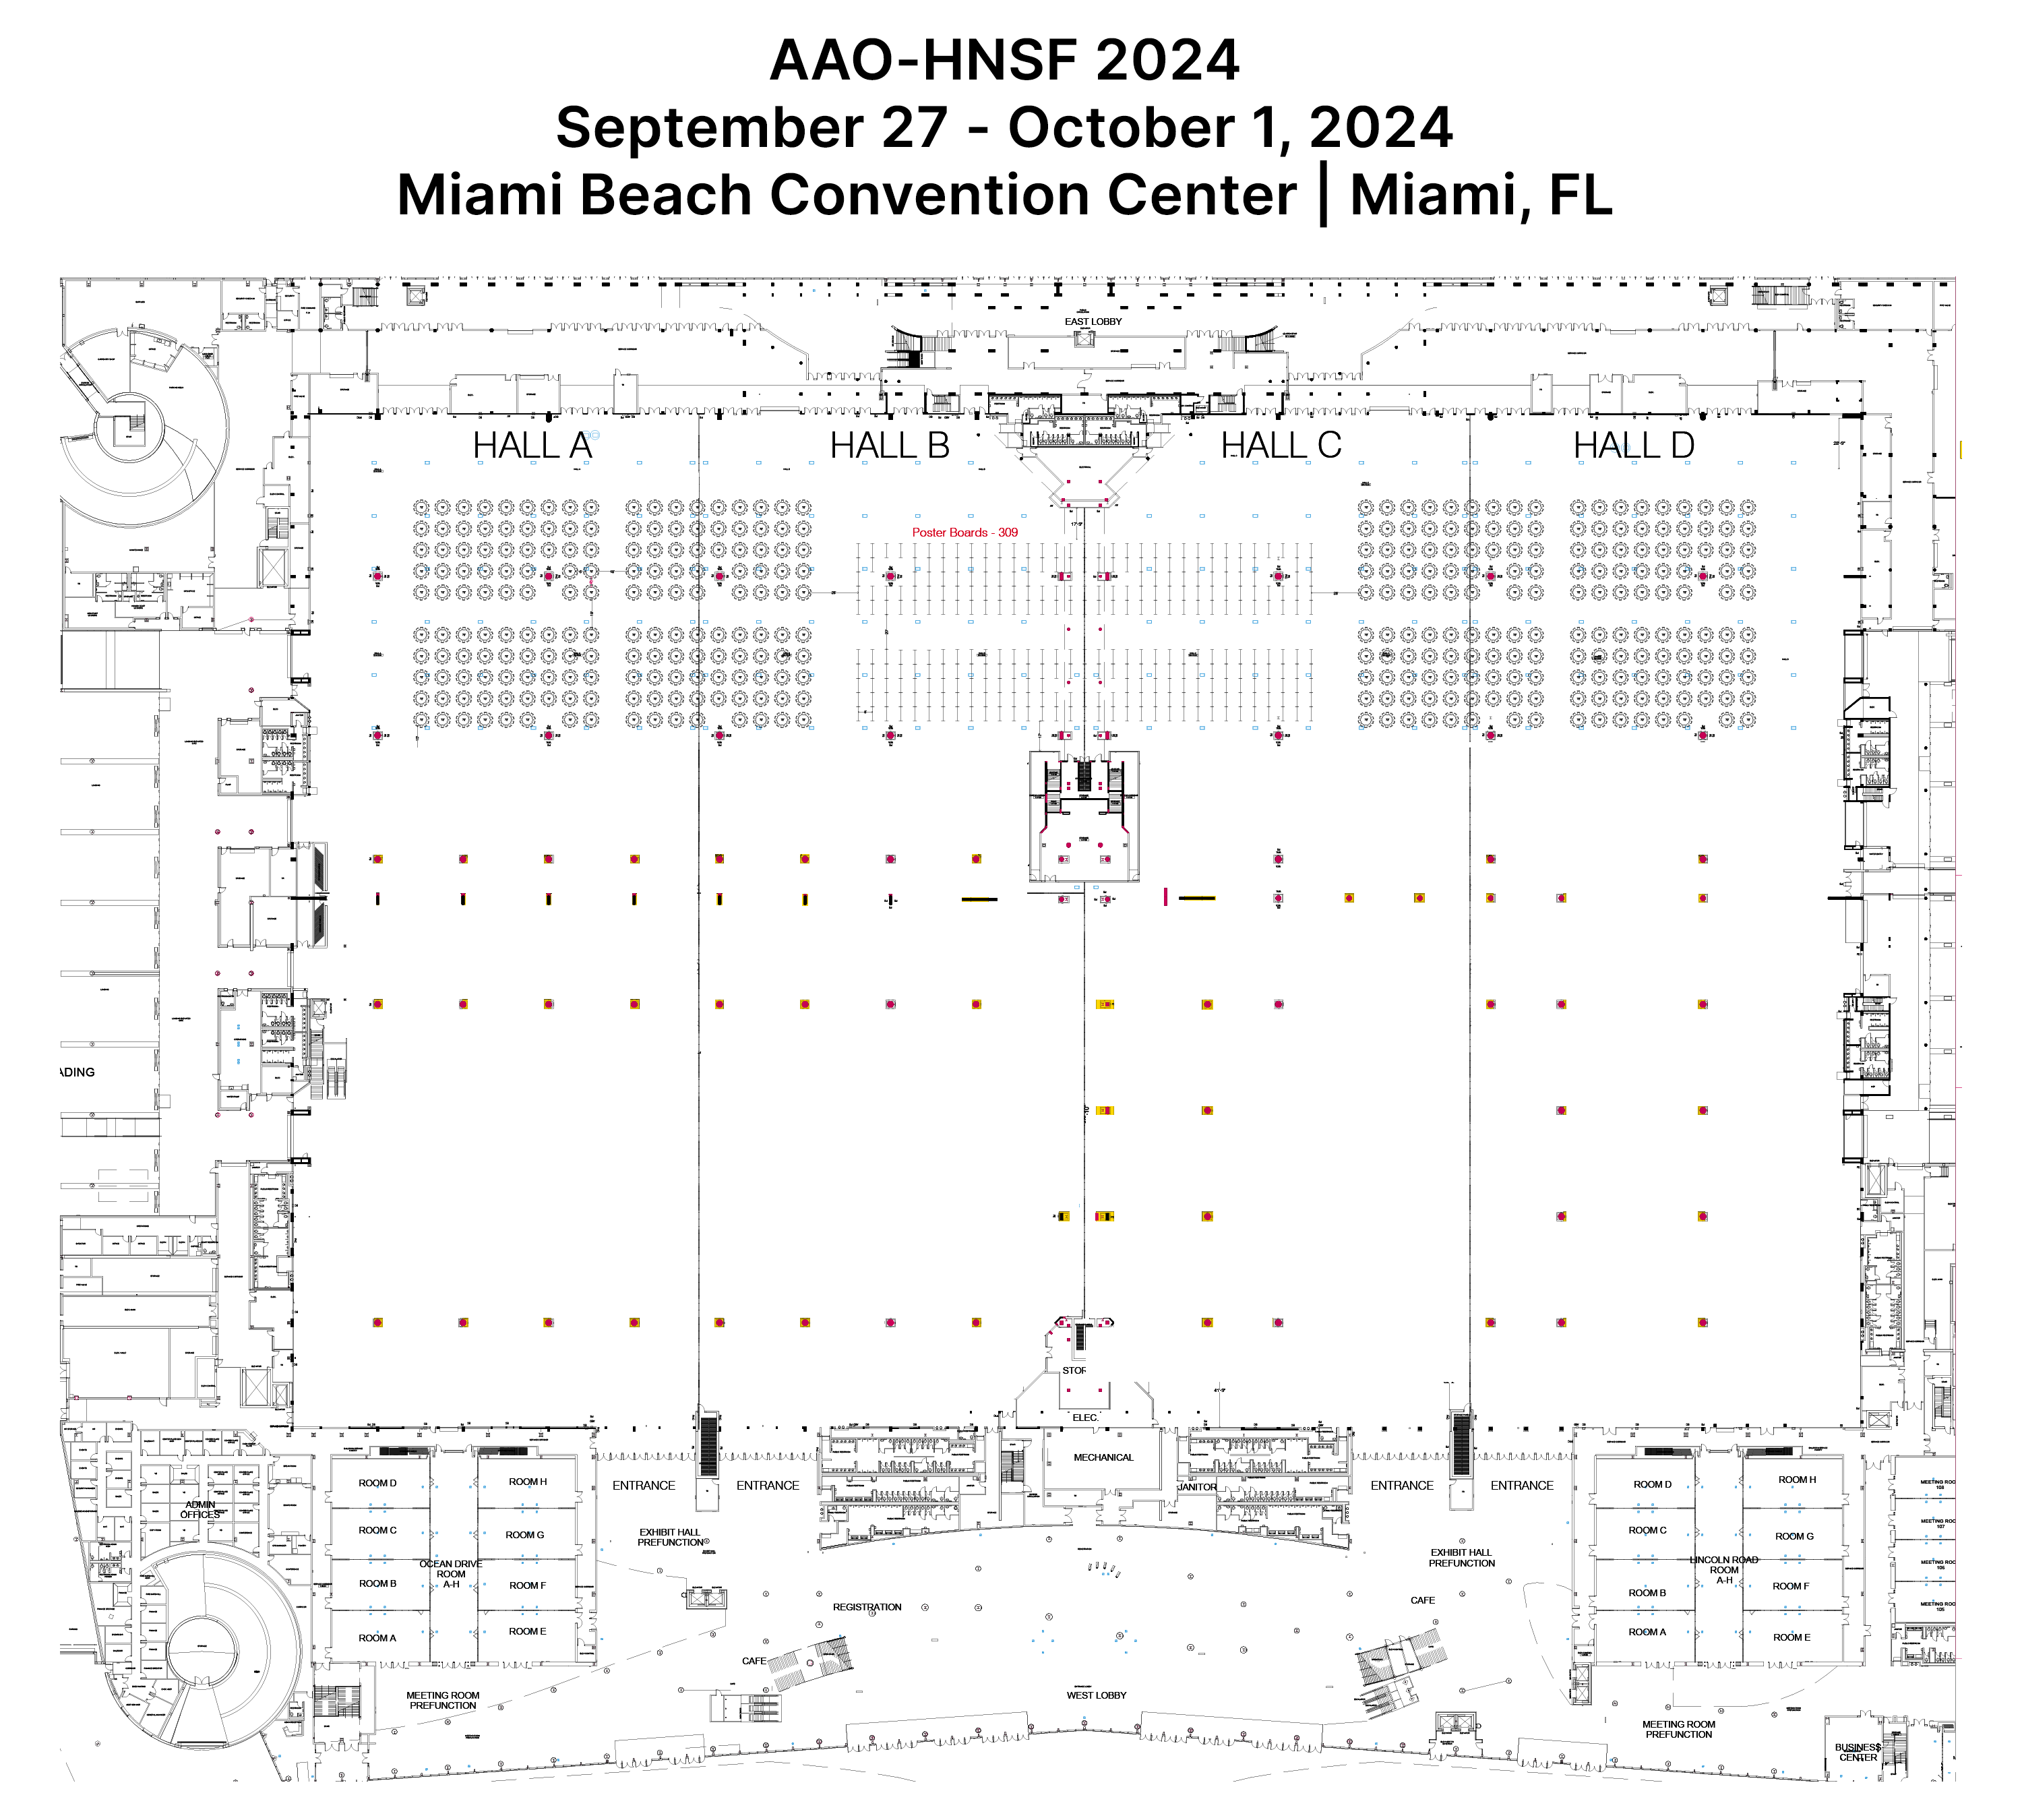 AAOHNSF 2024 Annual Meeting & OTO EXPO Exhibitor Floor Plan